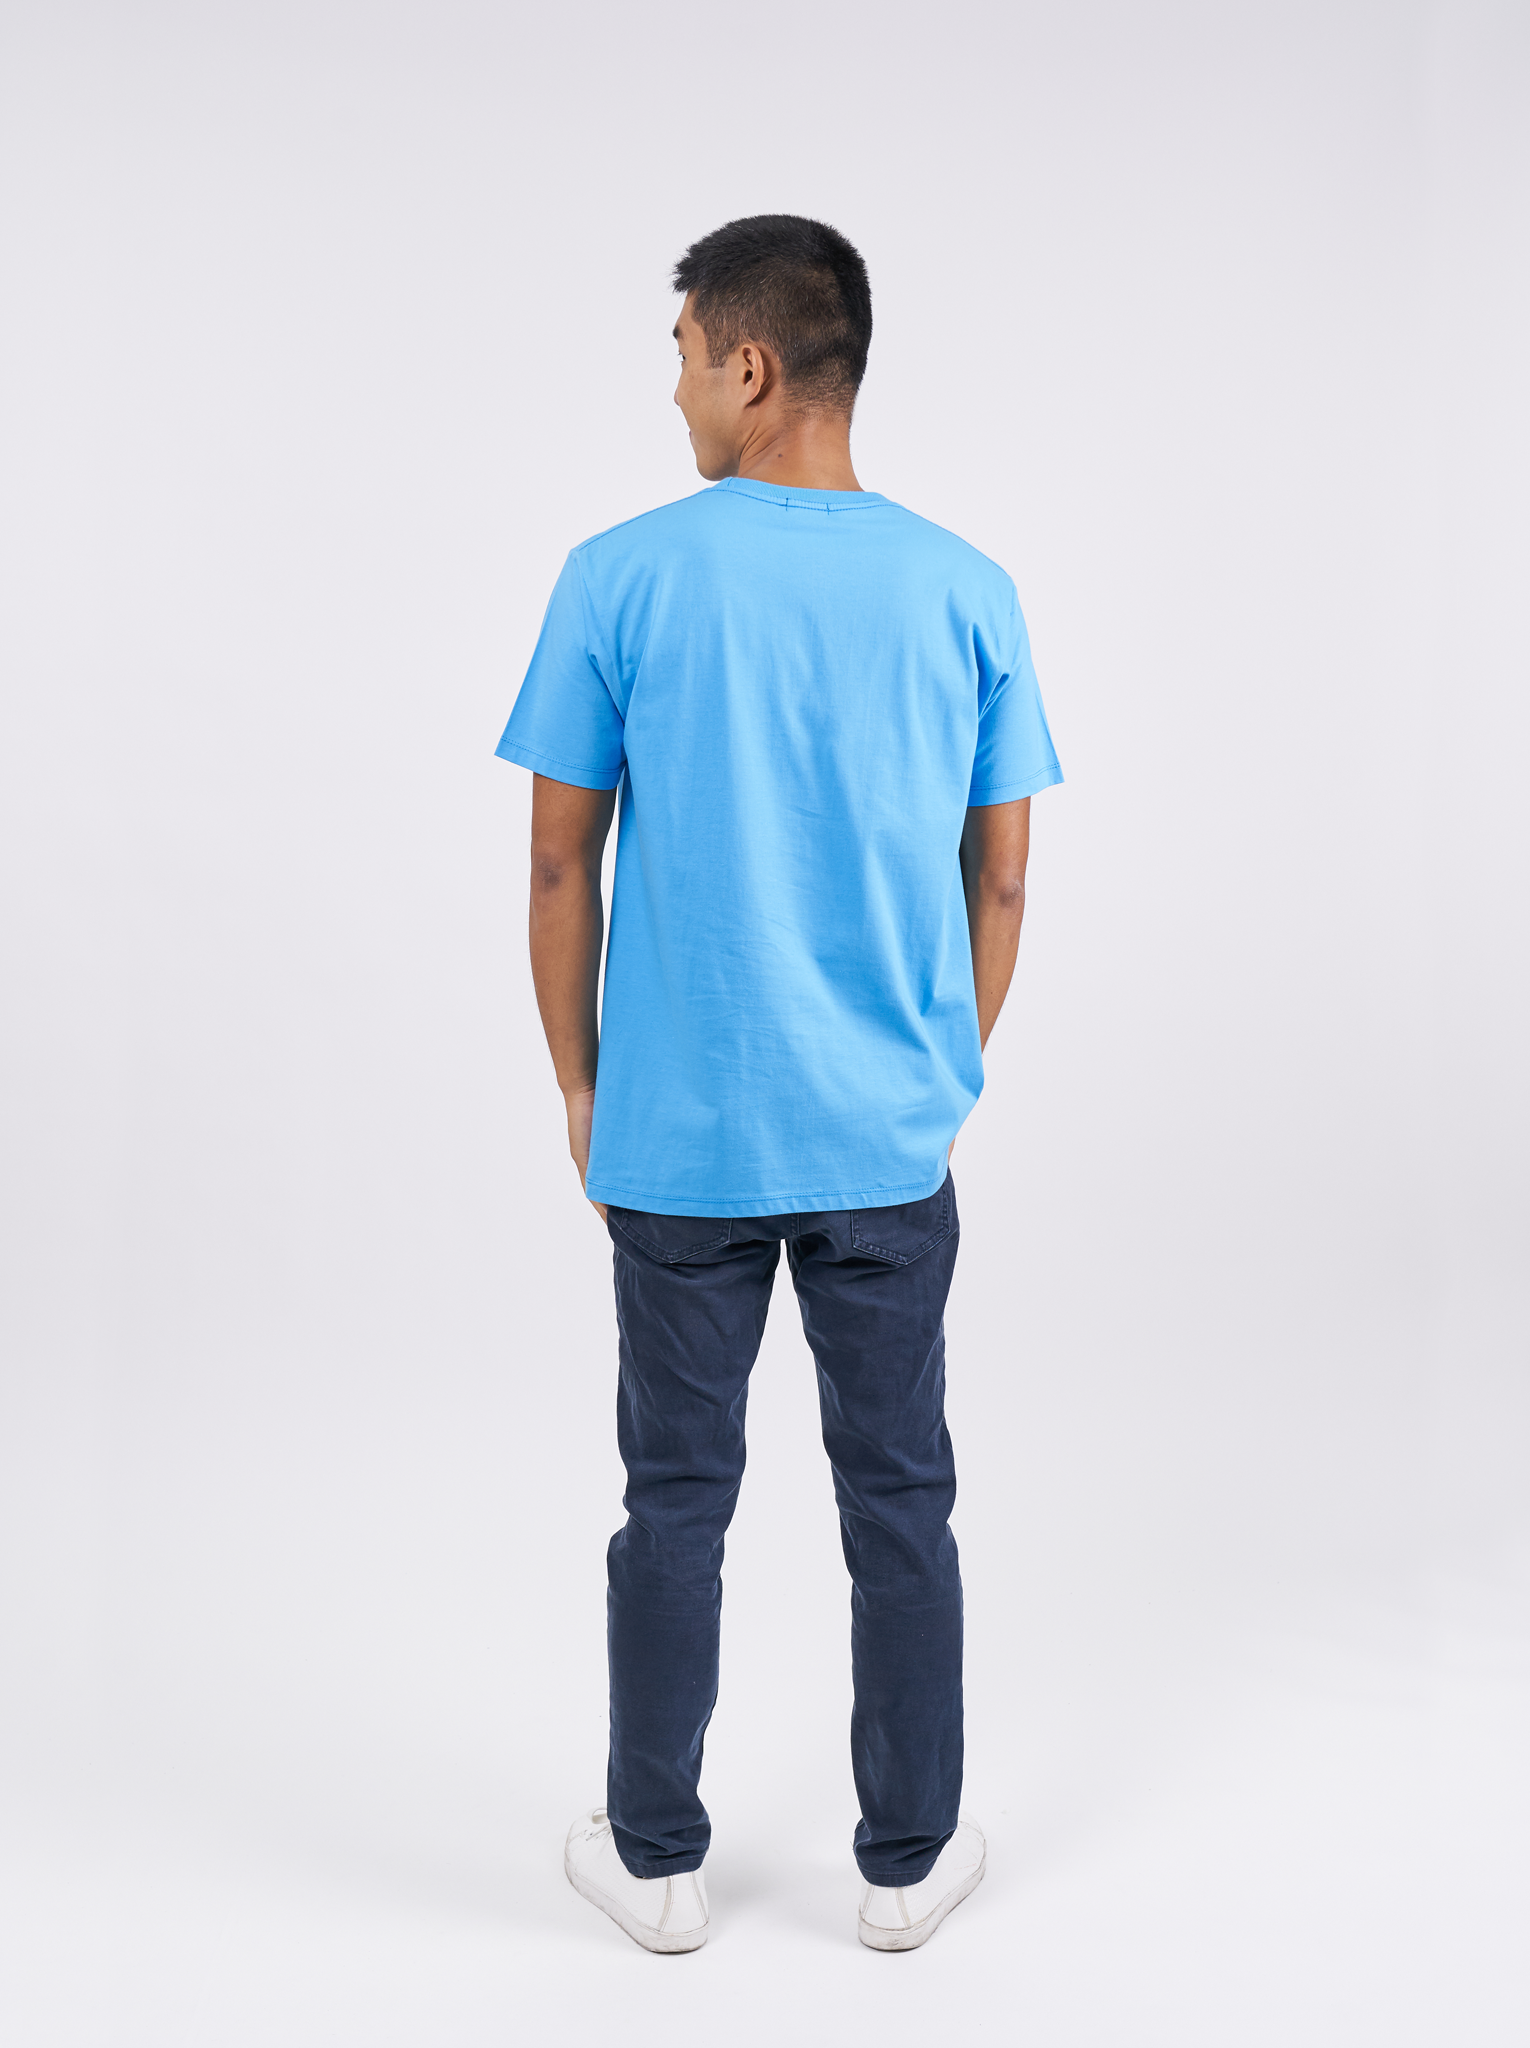 T-Shirt เสื้อยืด (Light Blue, สีฟ้า)(Unisex)